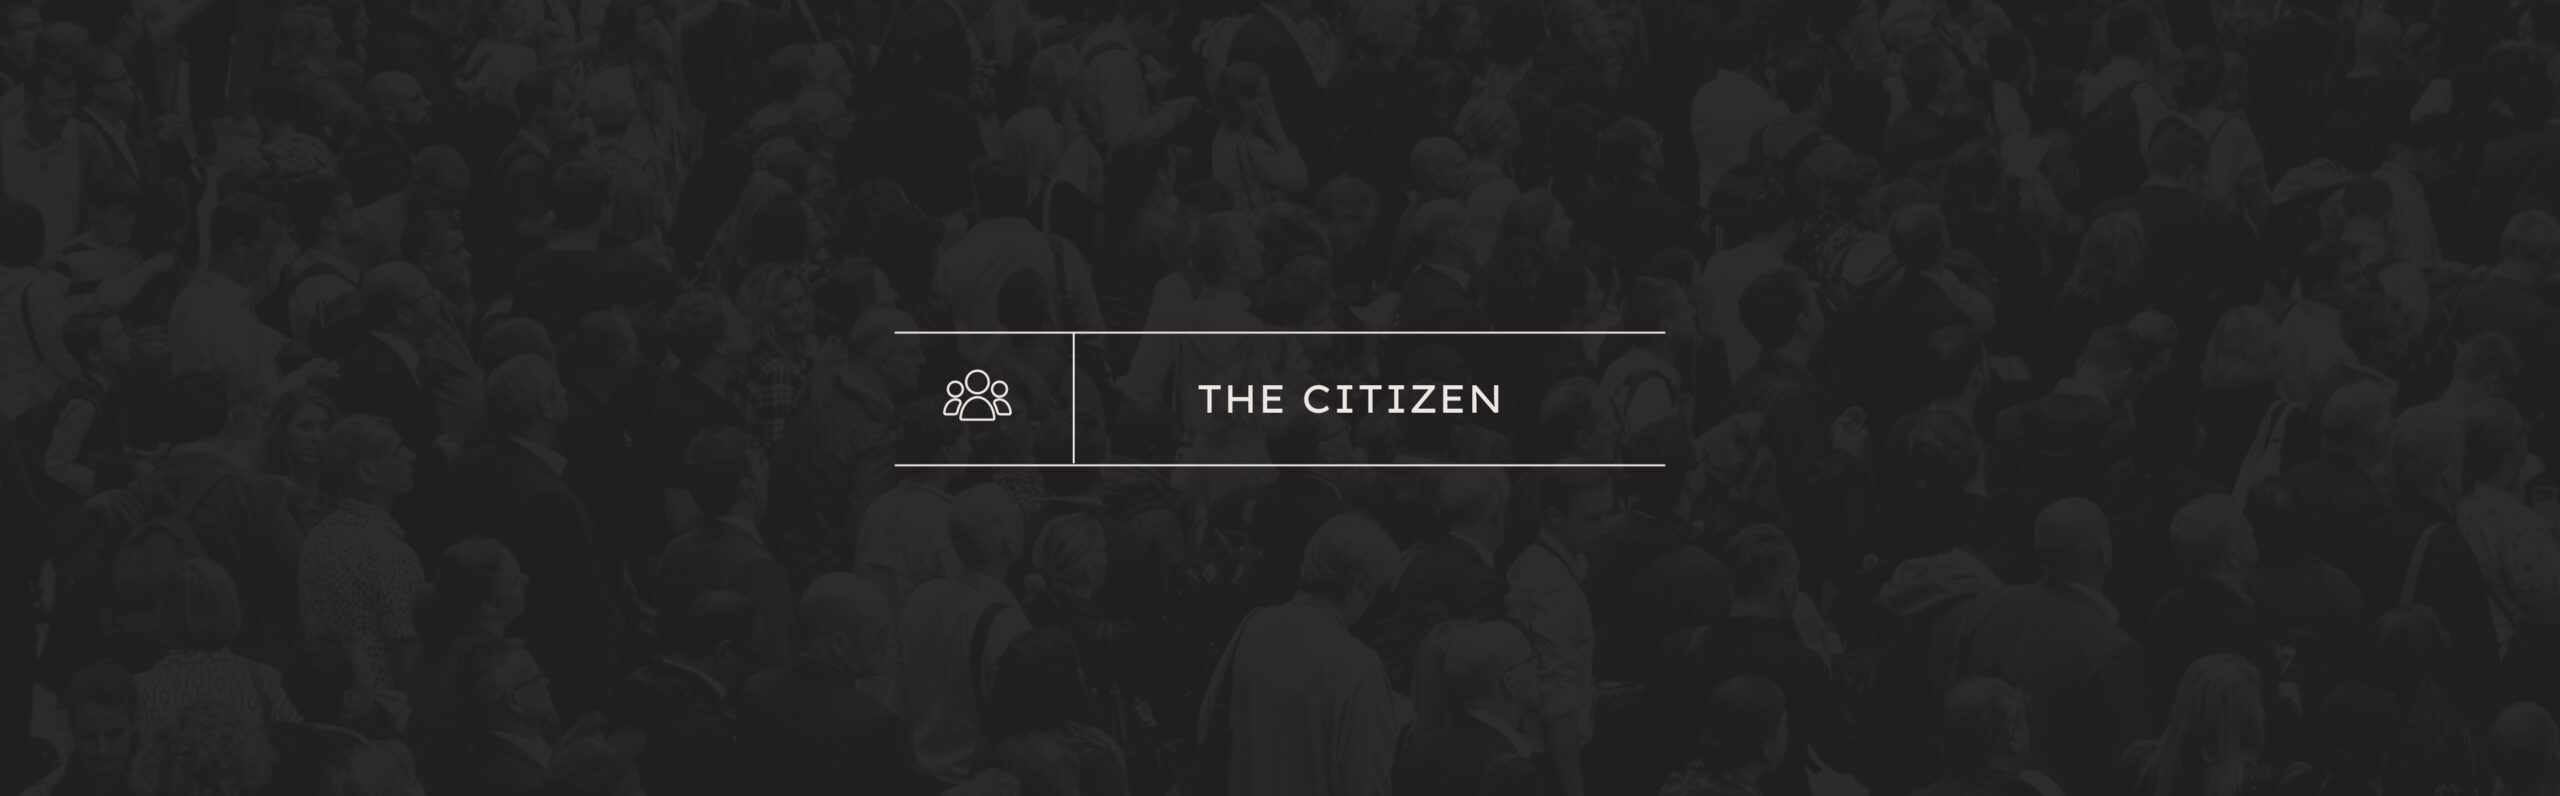 The Citizen Archetype for Branding - Astute Communications